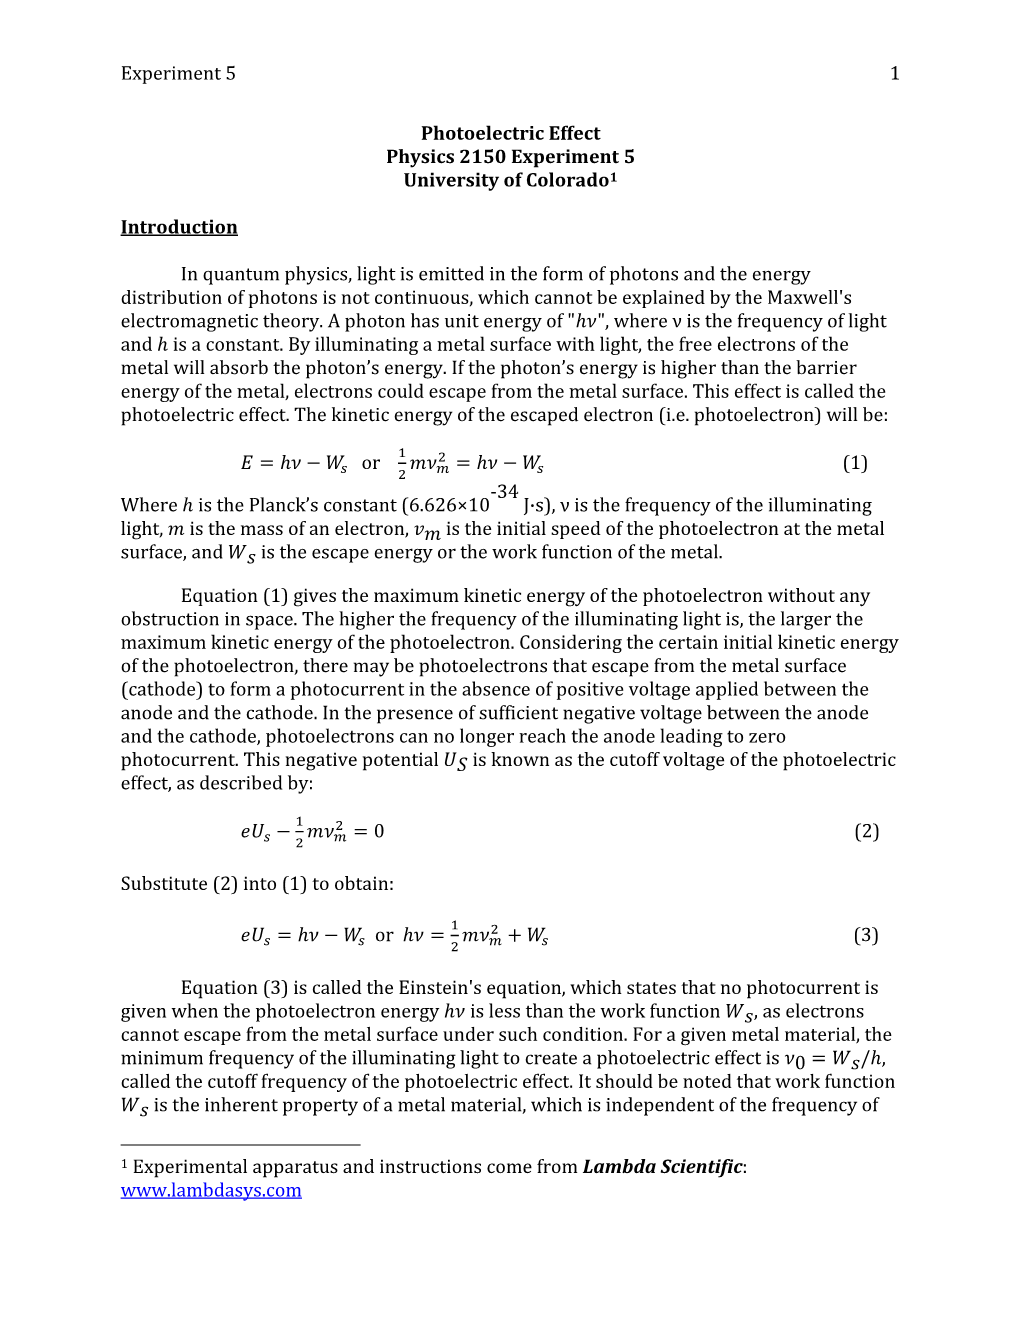 Photoelectric Effect Physics 2150 Experiment 5 University of Colorado1